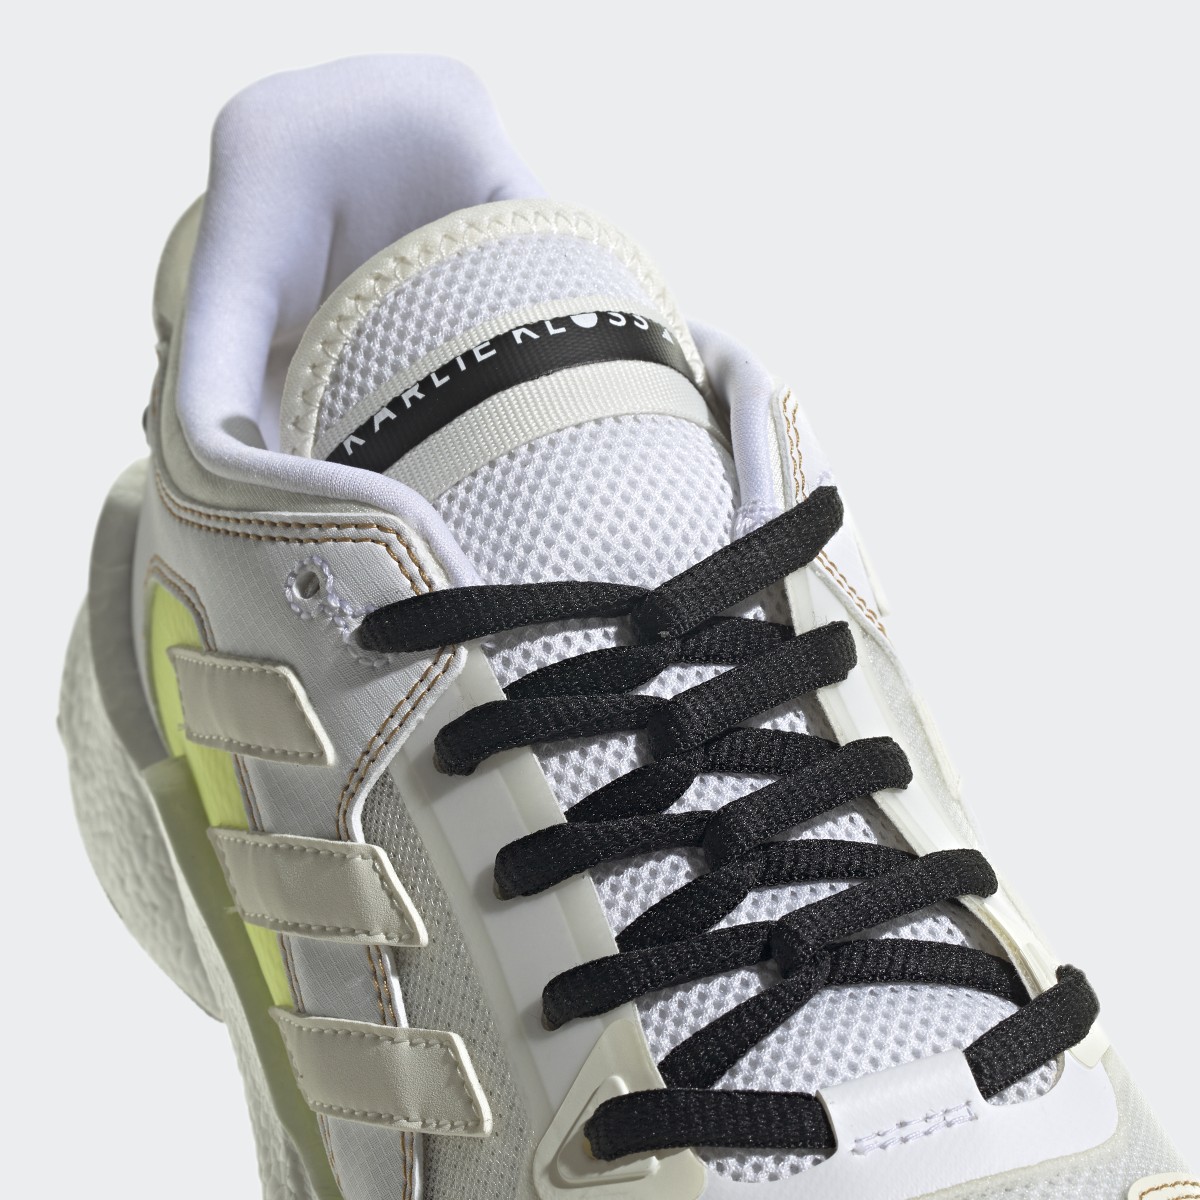 Adidas Karlie Kloss X9000 Shoes. 9